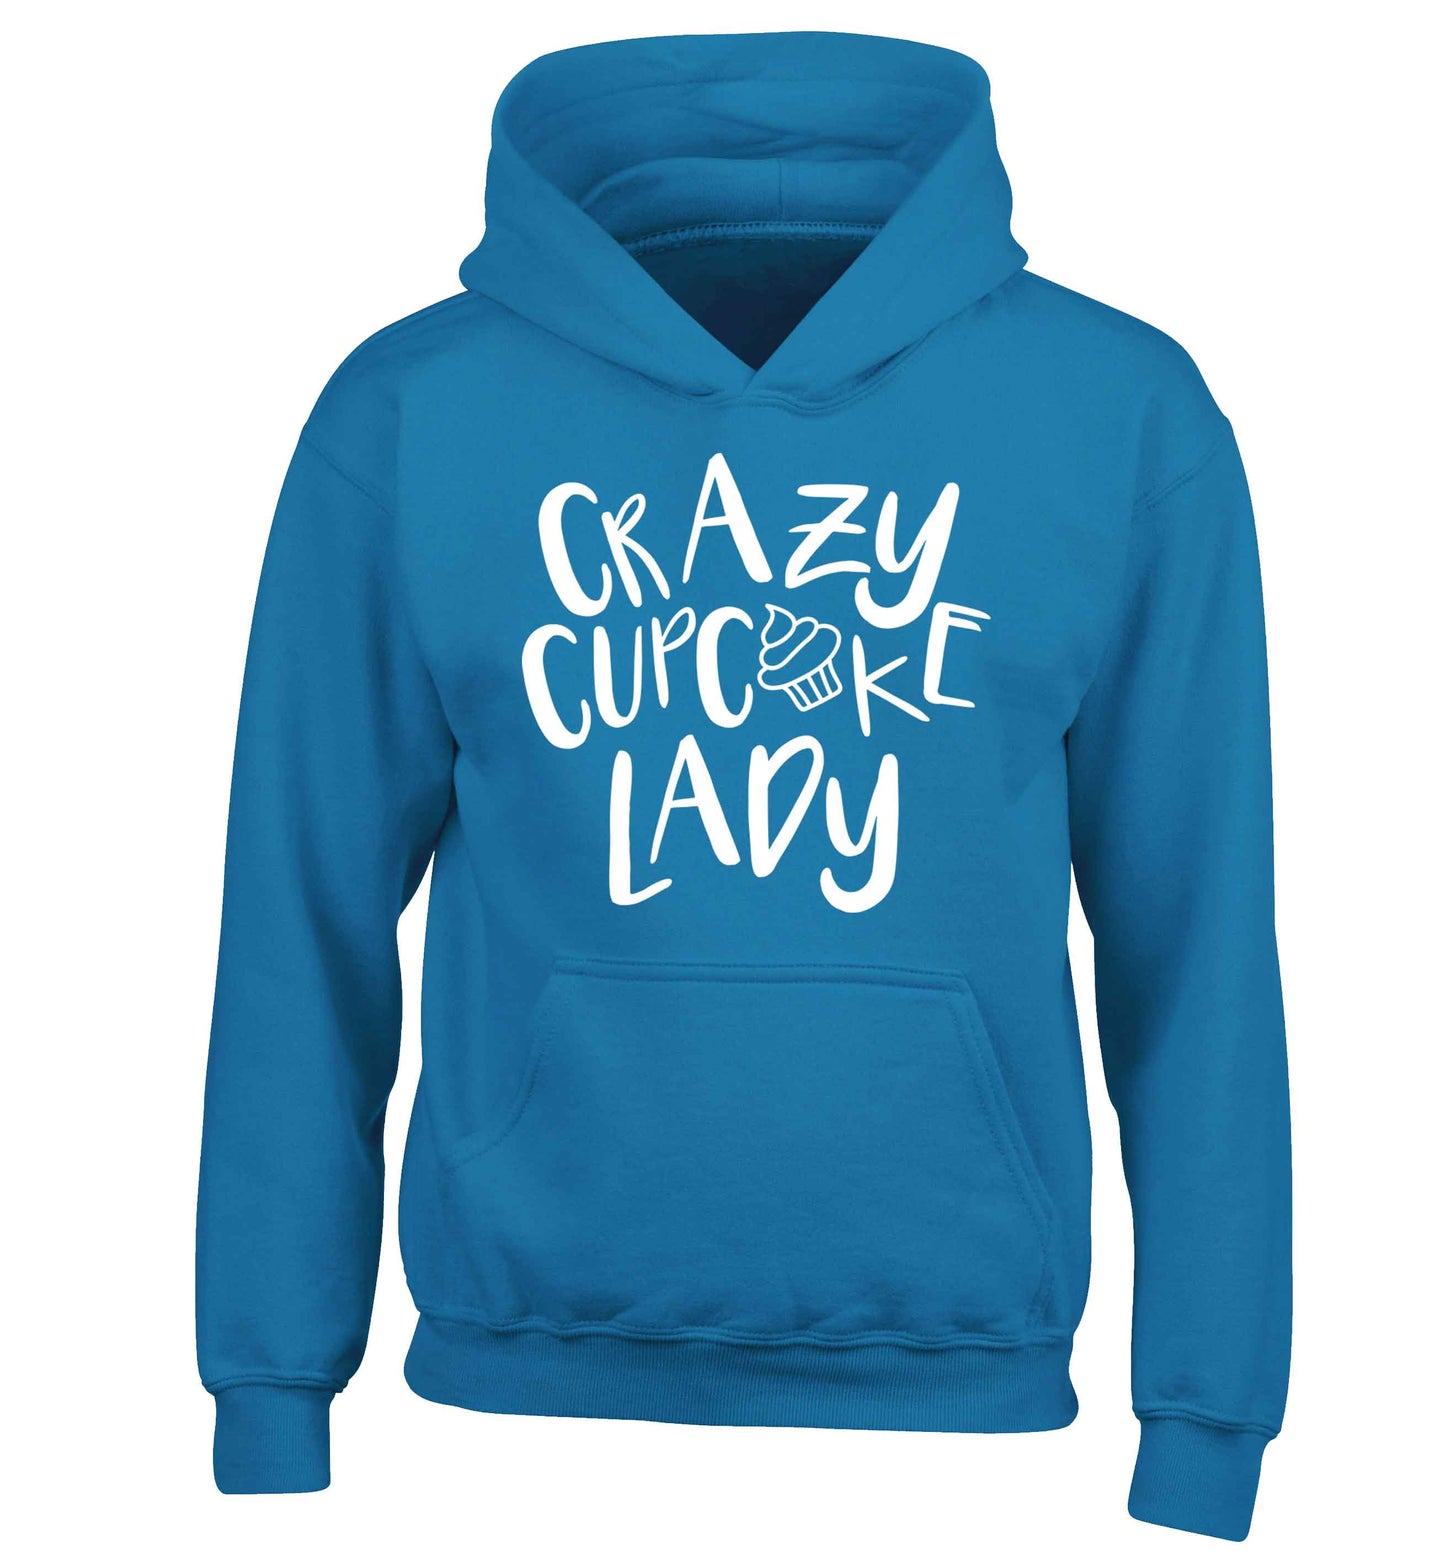 Crazy cupcake lady children's blue hoodie 12-13 Years